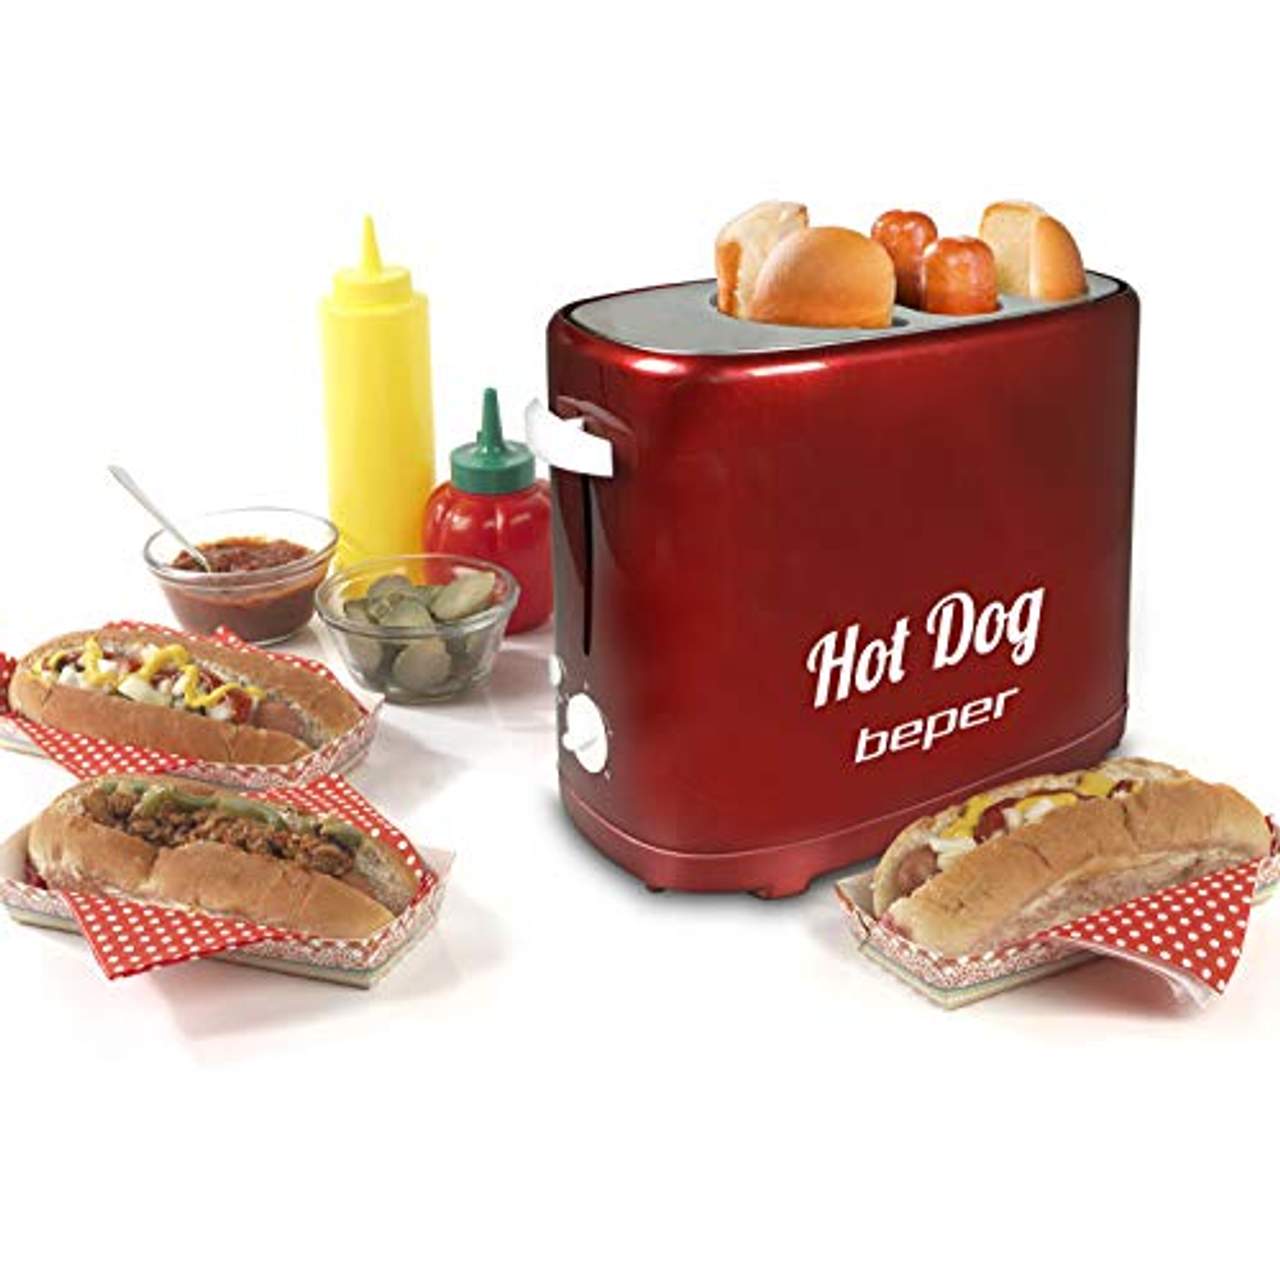 BEPER Maschine Hot Dog 750 W